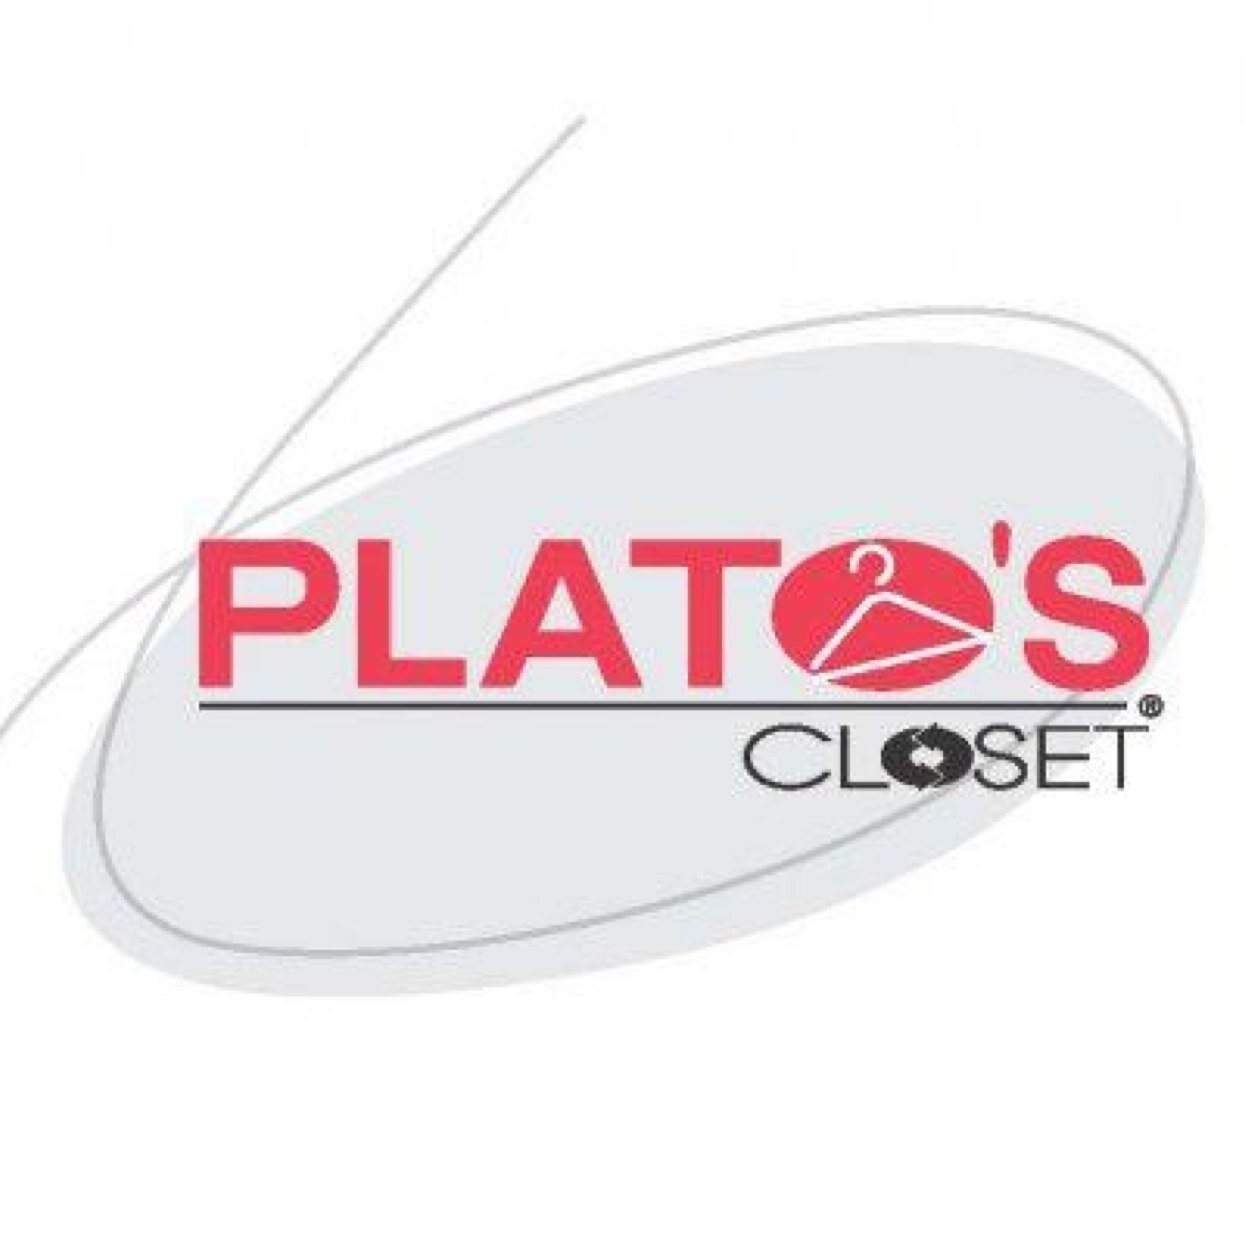 Platos closet reddit